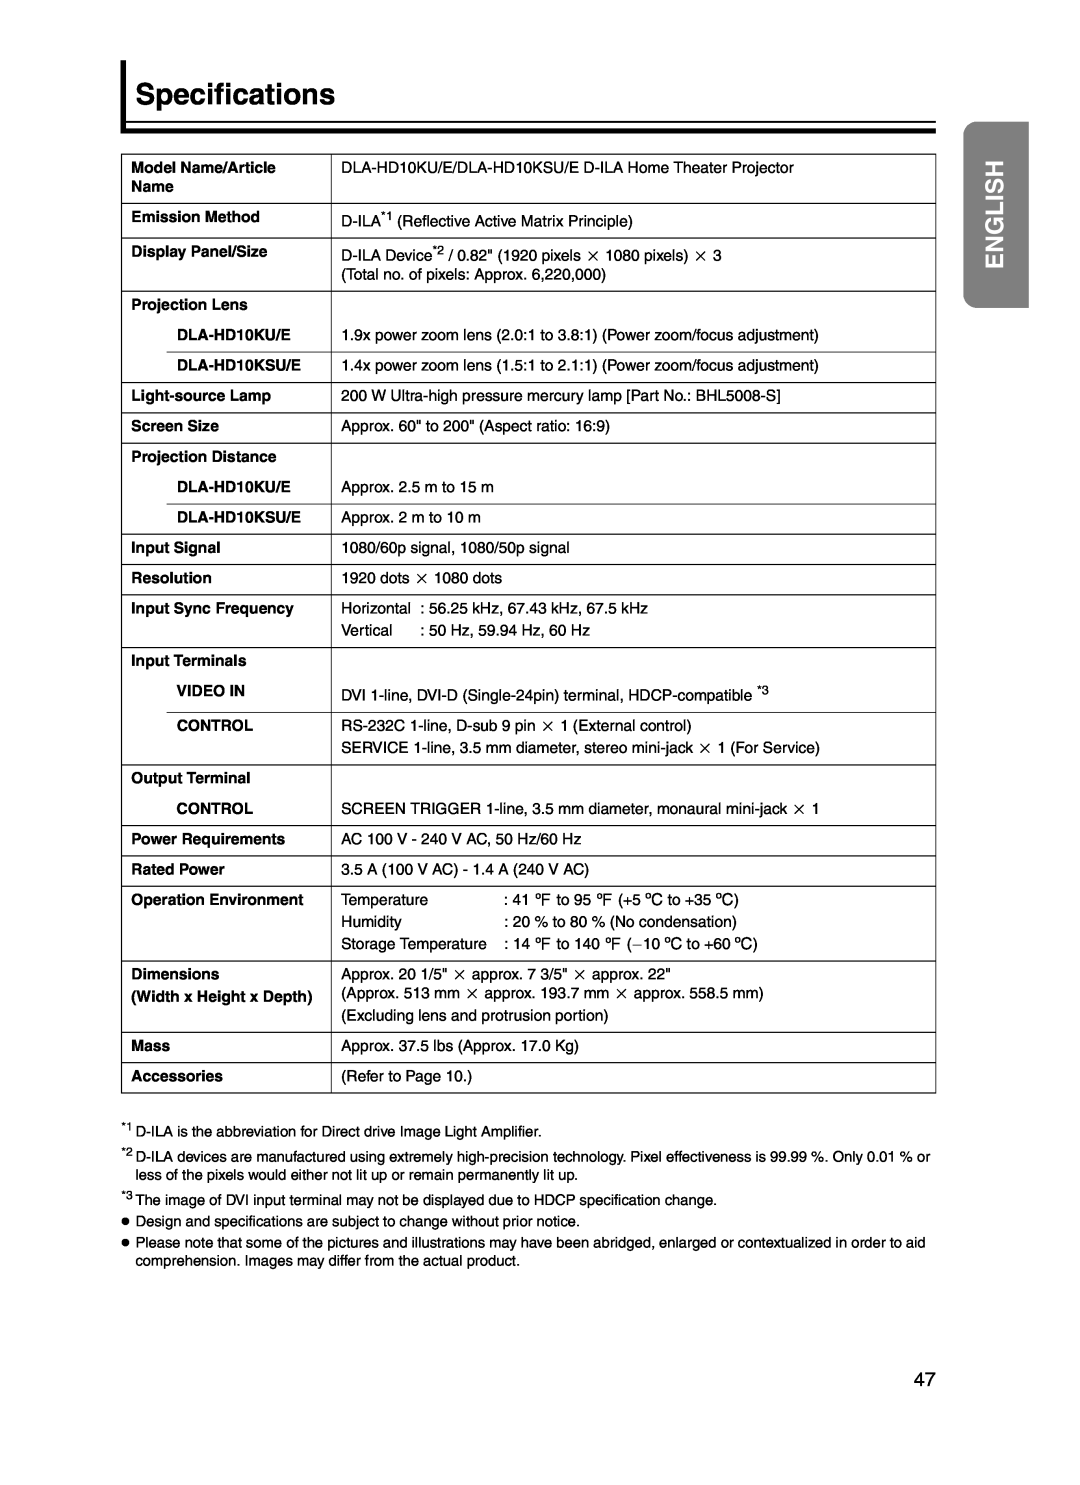 JVC DLA-HD10KSU/E, DLA-HD10KU/E manual Specifications 